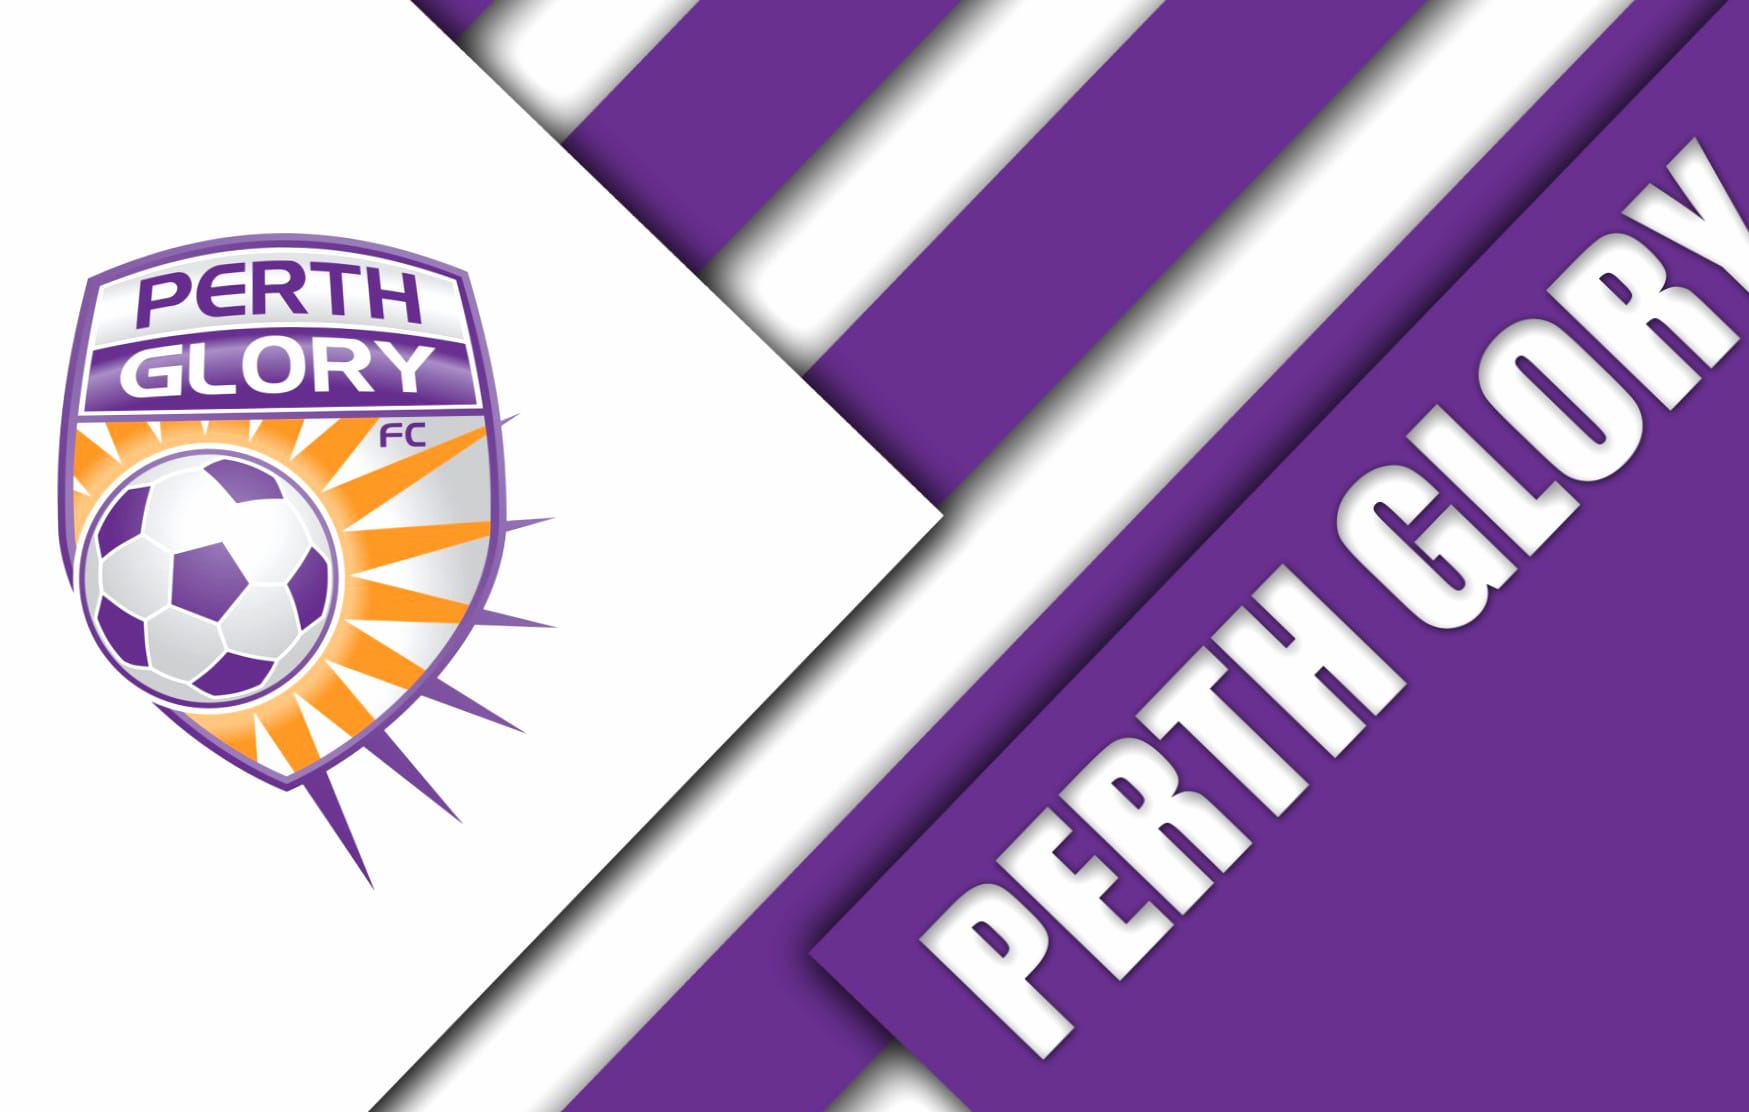 Perth Glory FC at 1024 x 1024 iPad size wallpapers HD quality